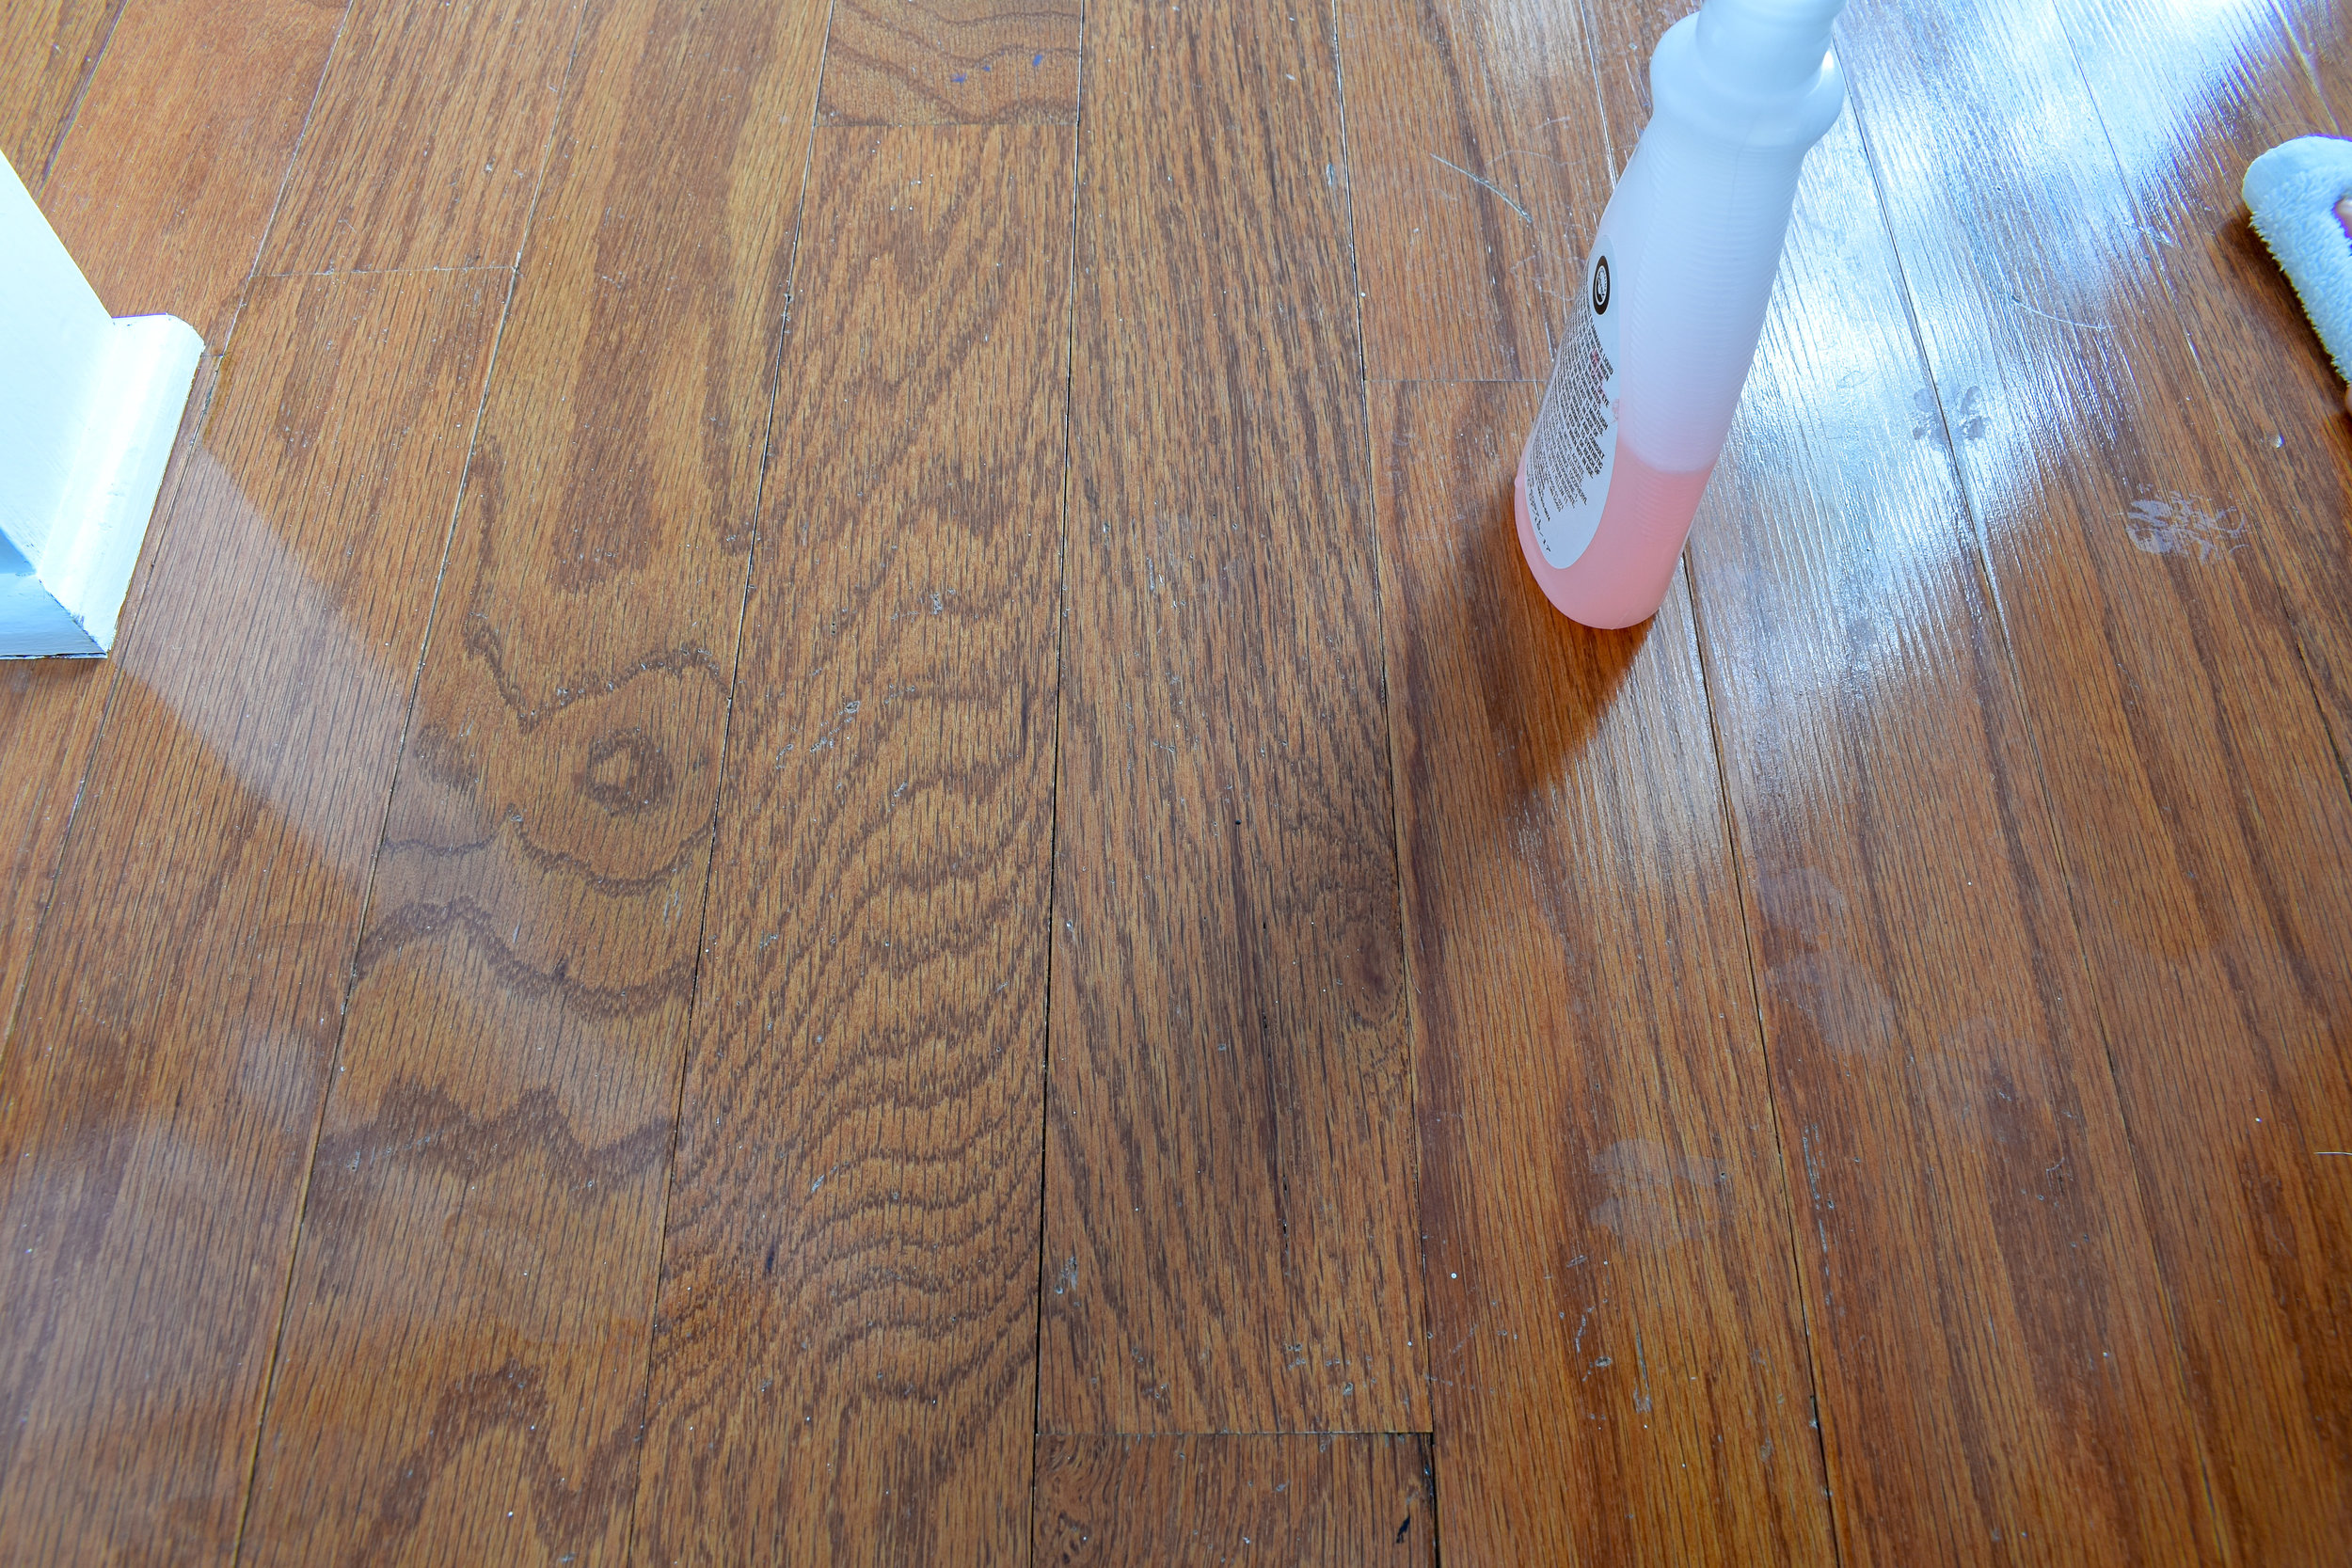 How To Make Old Hardwood Floors Shine, How Do I Keep My Hardwood Floors Shiny